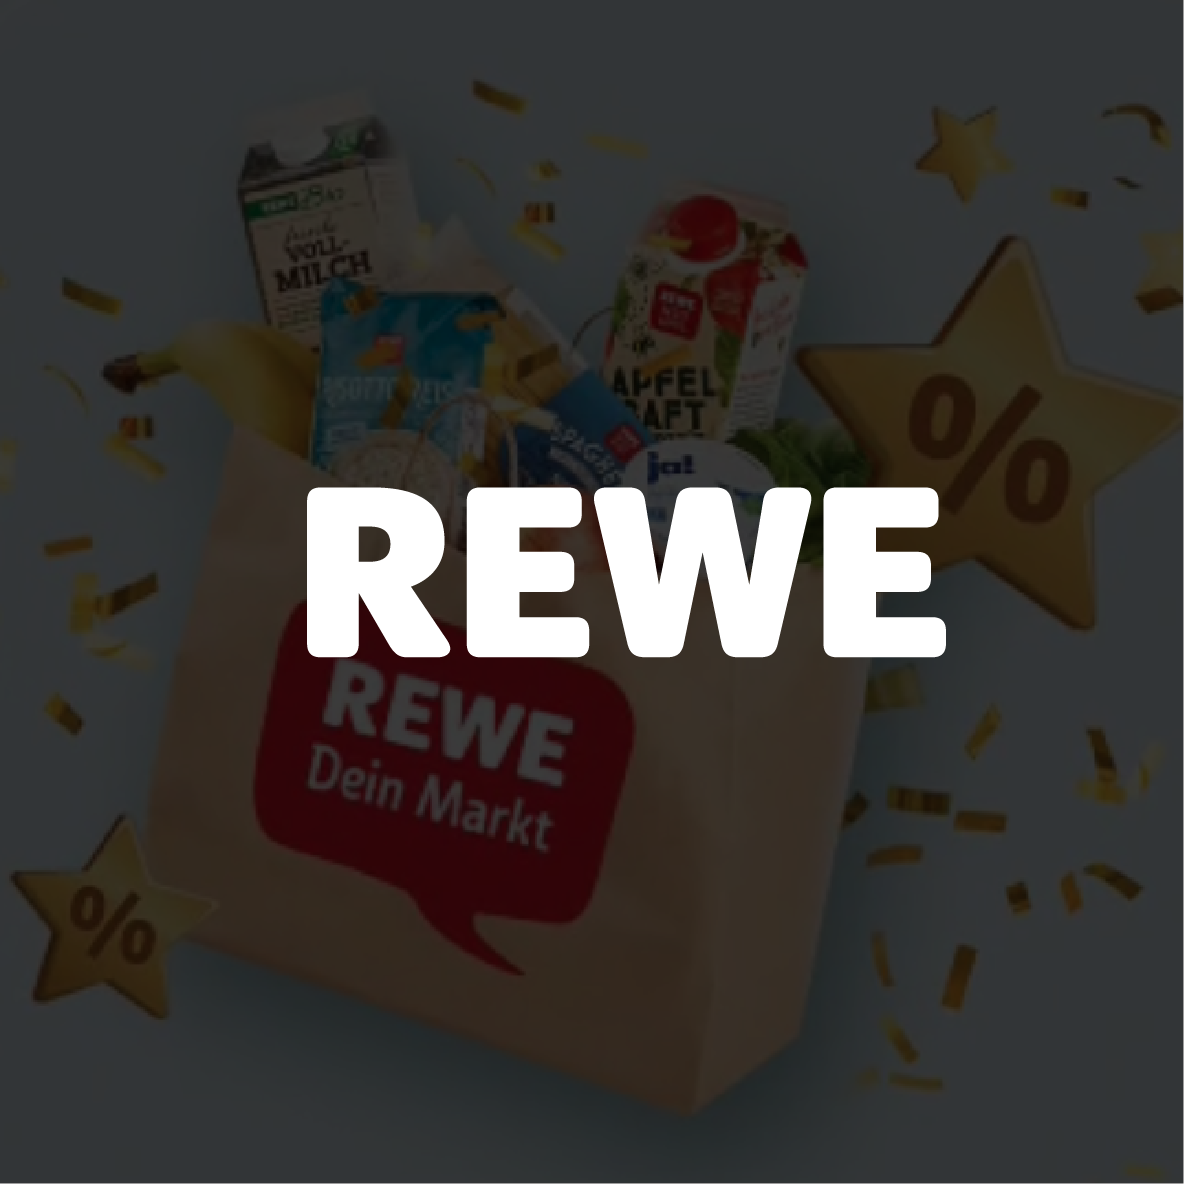 Rewe Grows In-Store Sales With Digital Flyers Via Private DMs on Instagram